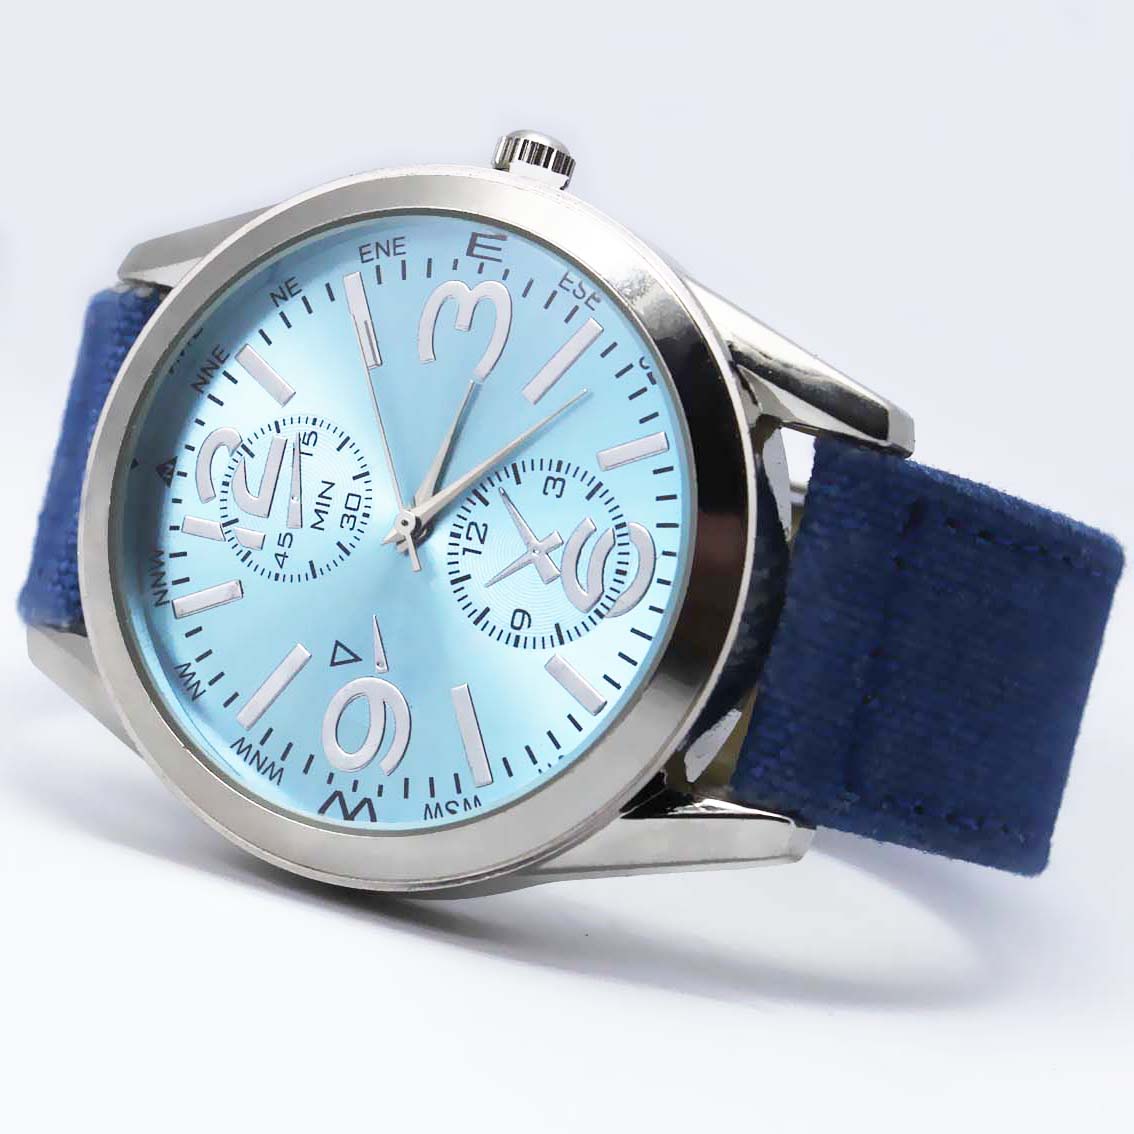 #02074Men's wristwatch quartz analog leather strap watch